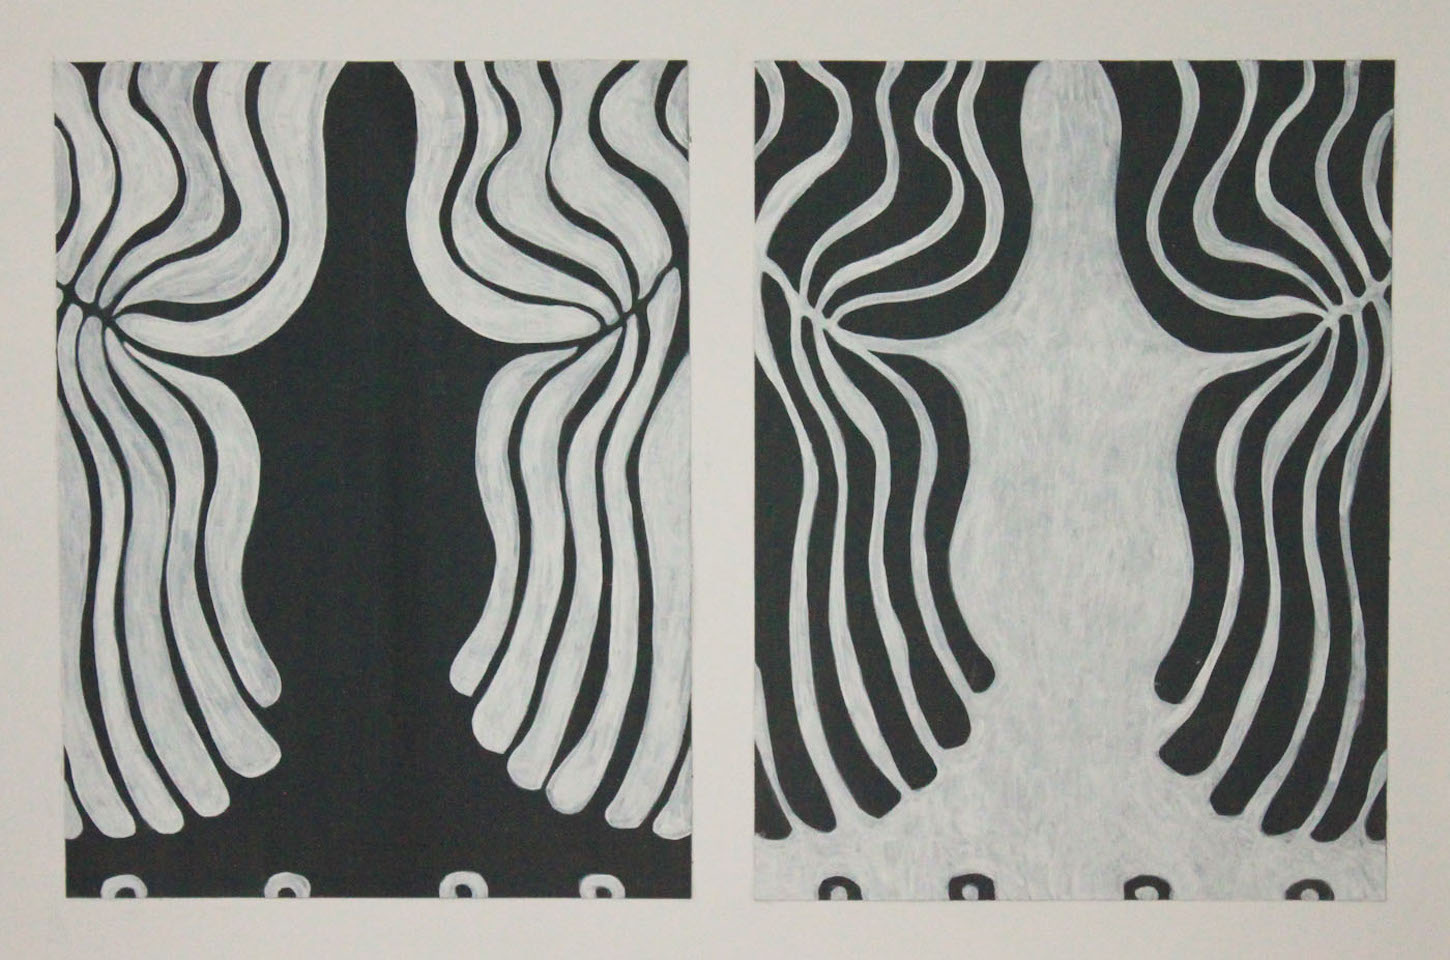 Veronica Cross, Doppelganger I, casein, gouache and plaster on paper, 15.5 x 22 in, 2015.